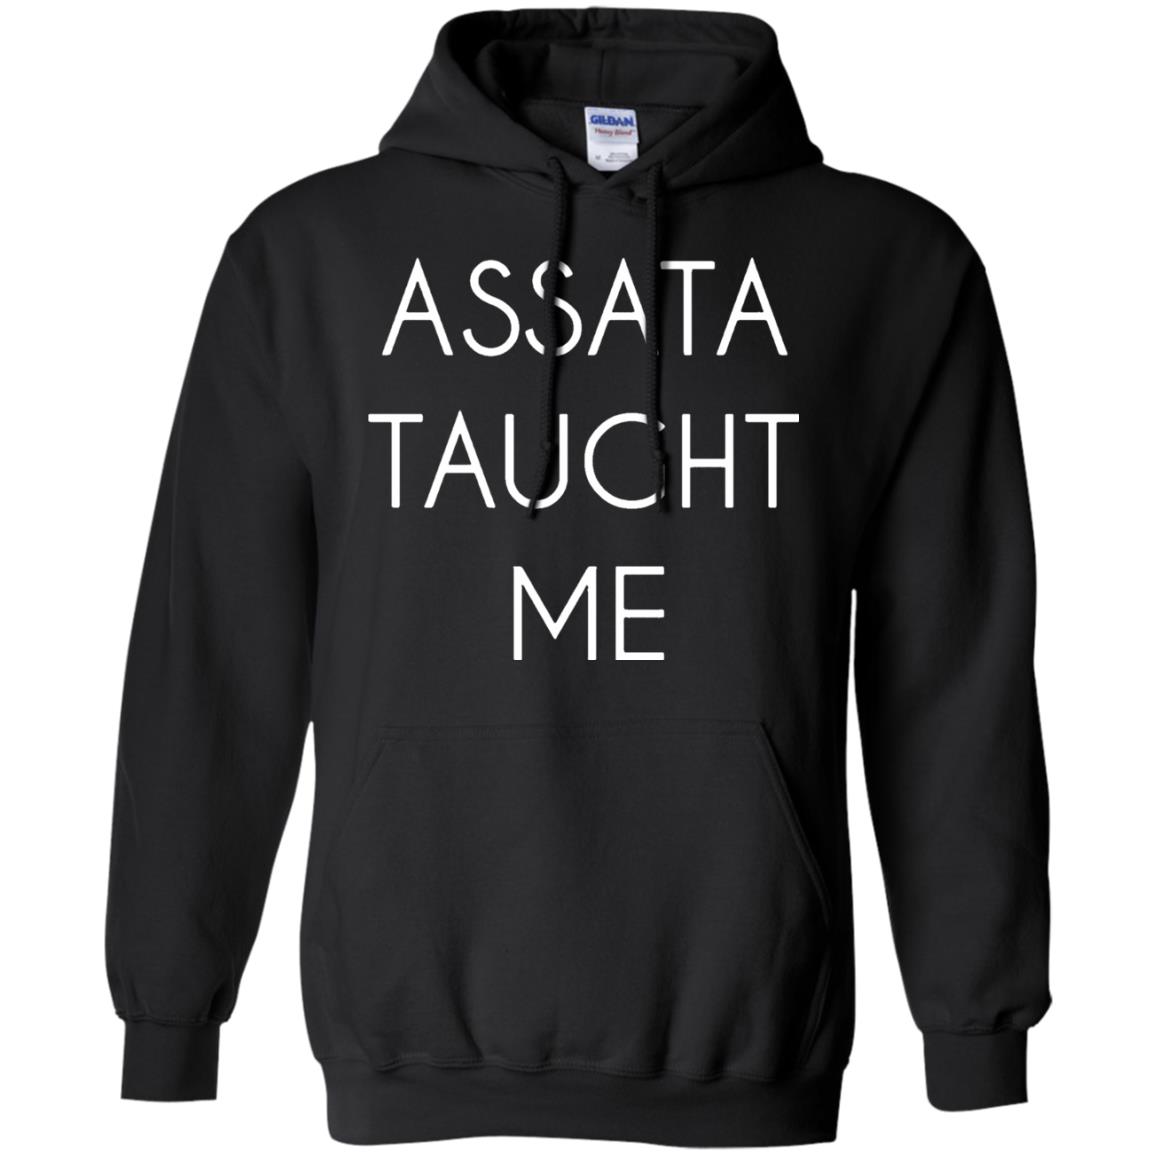 assata taught me hoodie - black